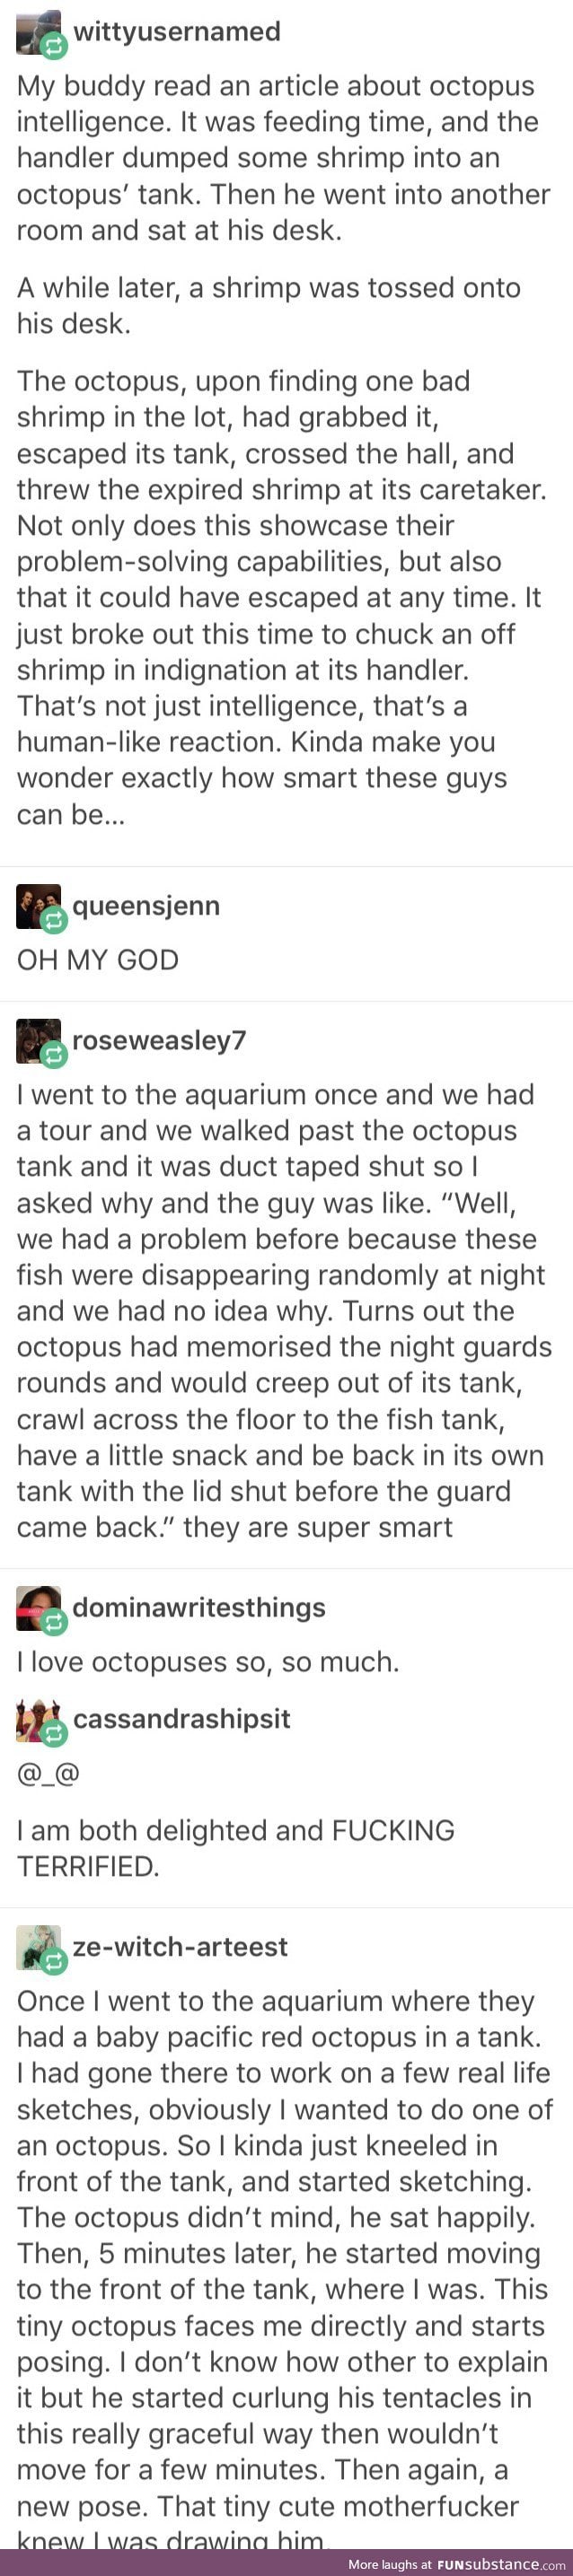 Octopi being smartasses